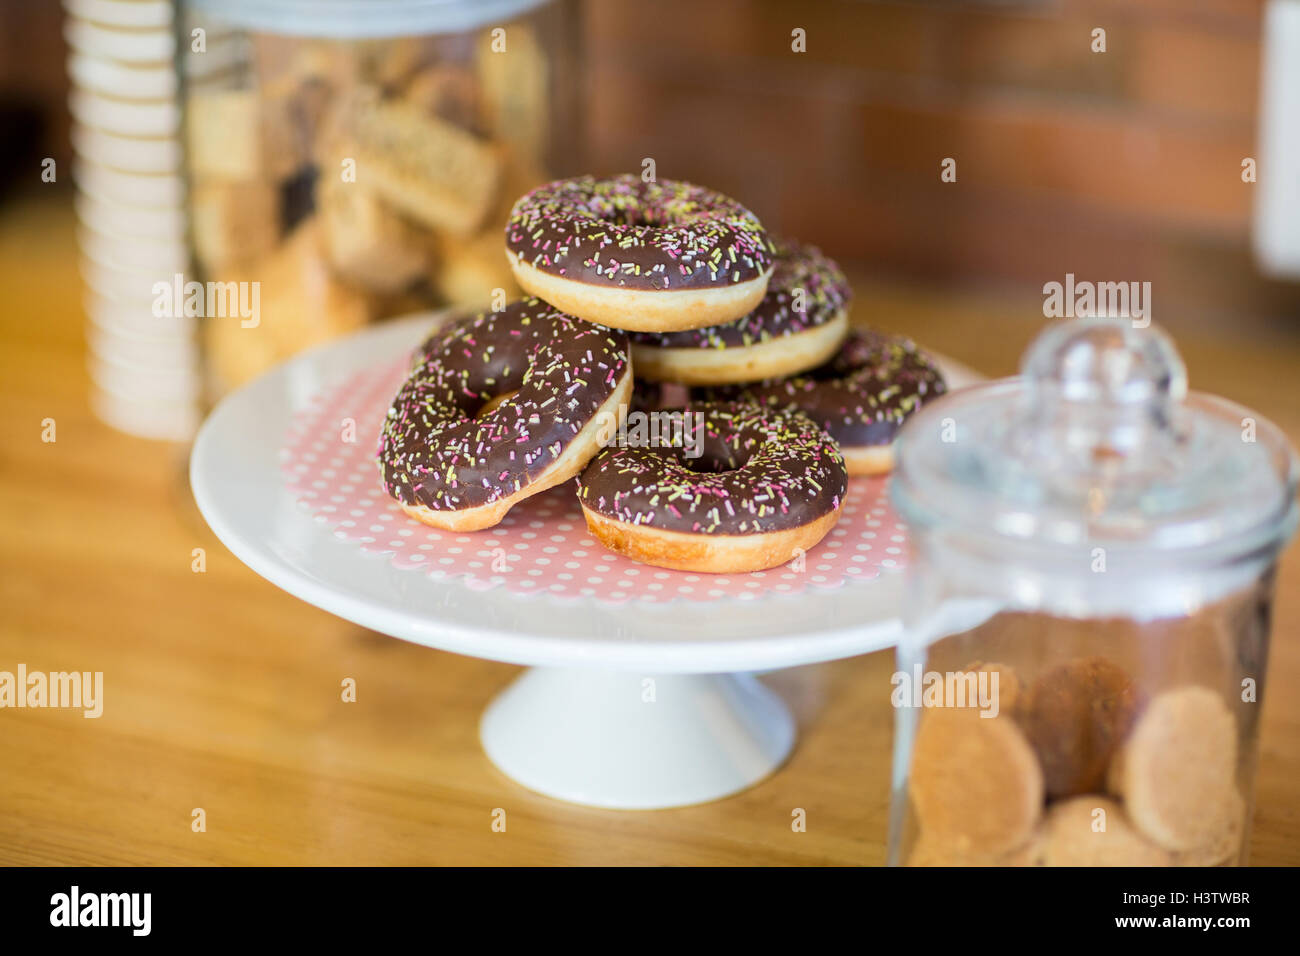 Doughnuts on cake stand Stock Photo